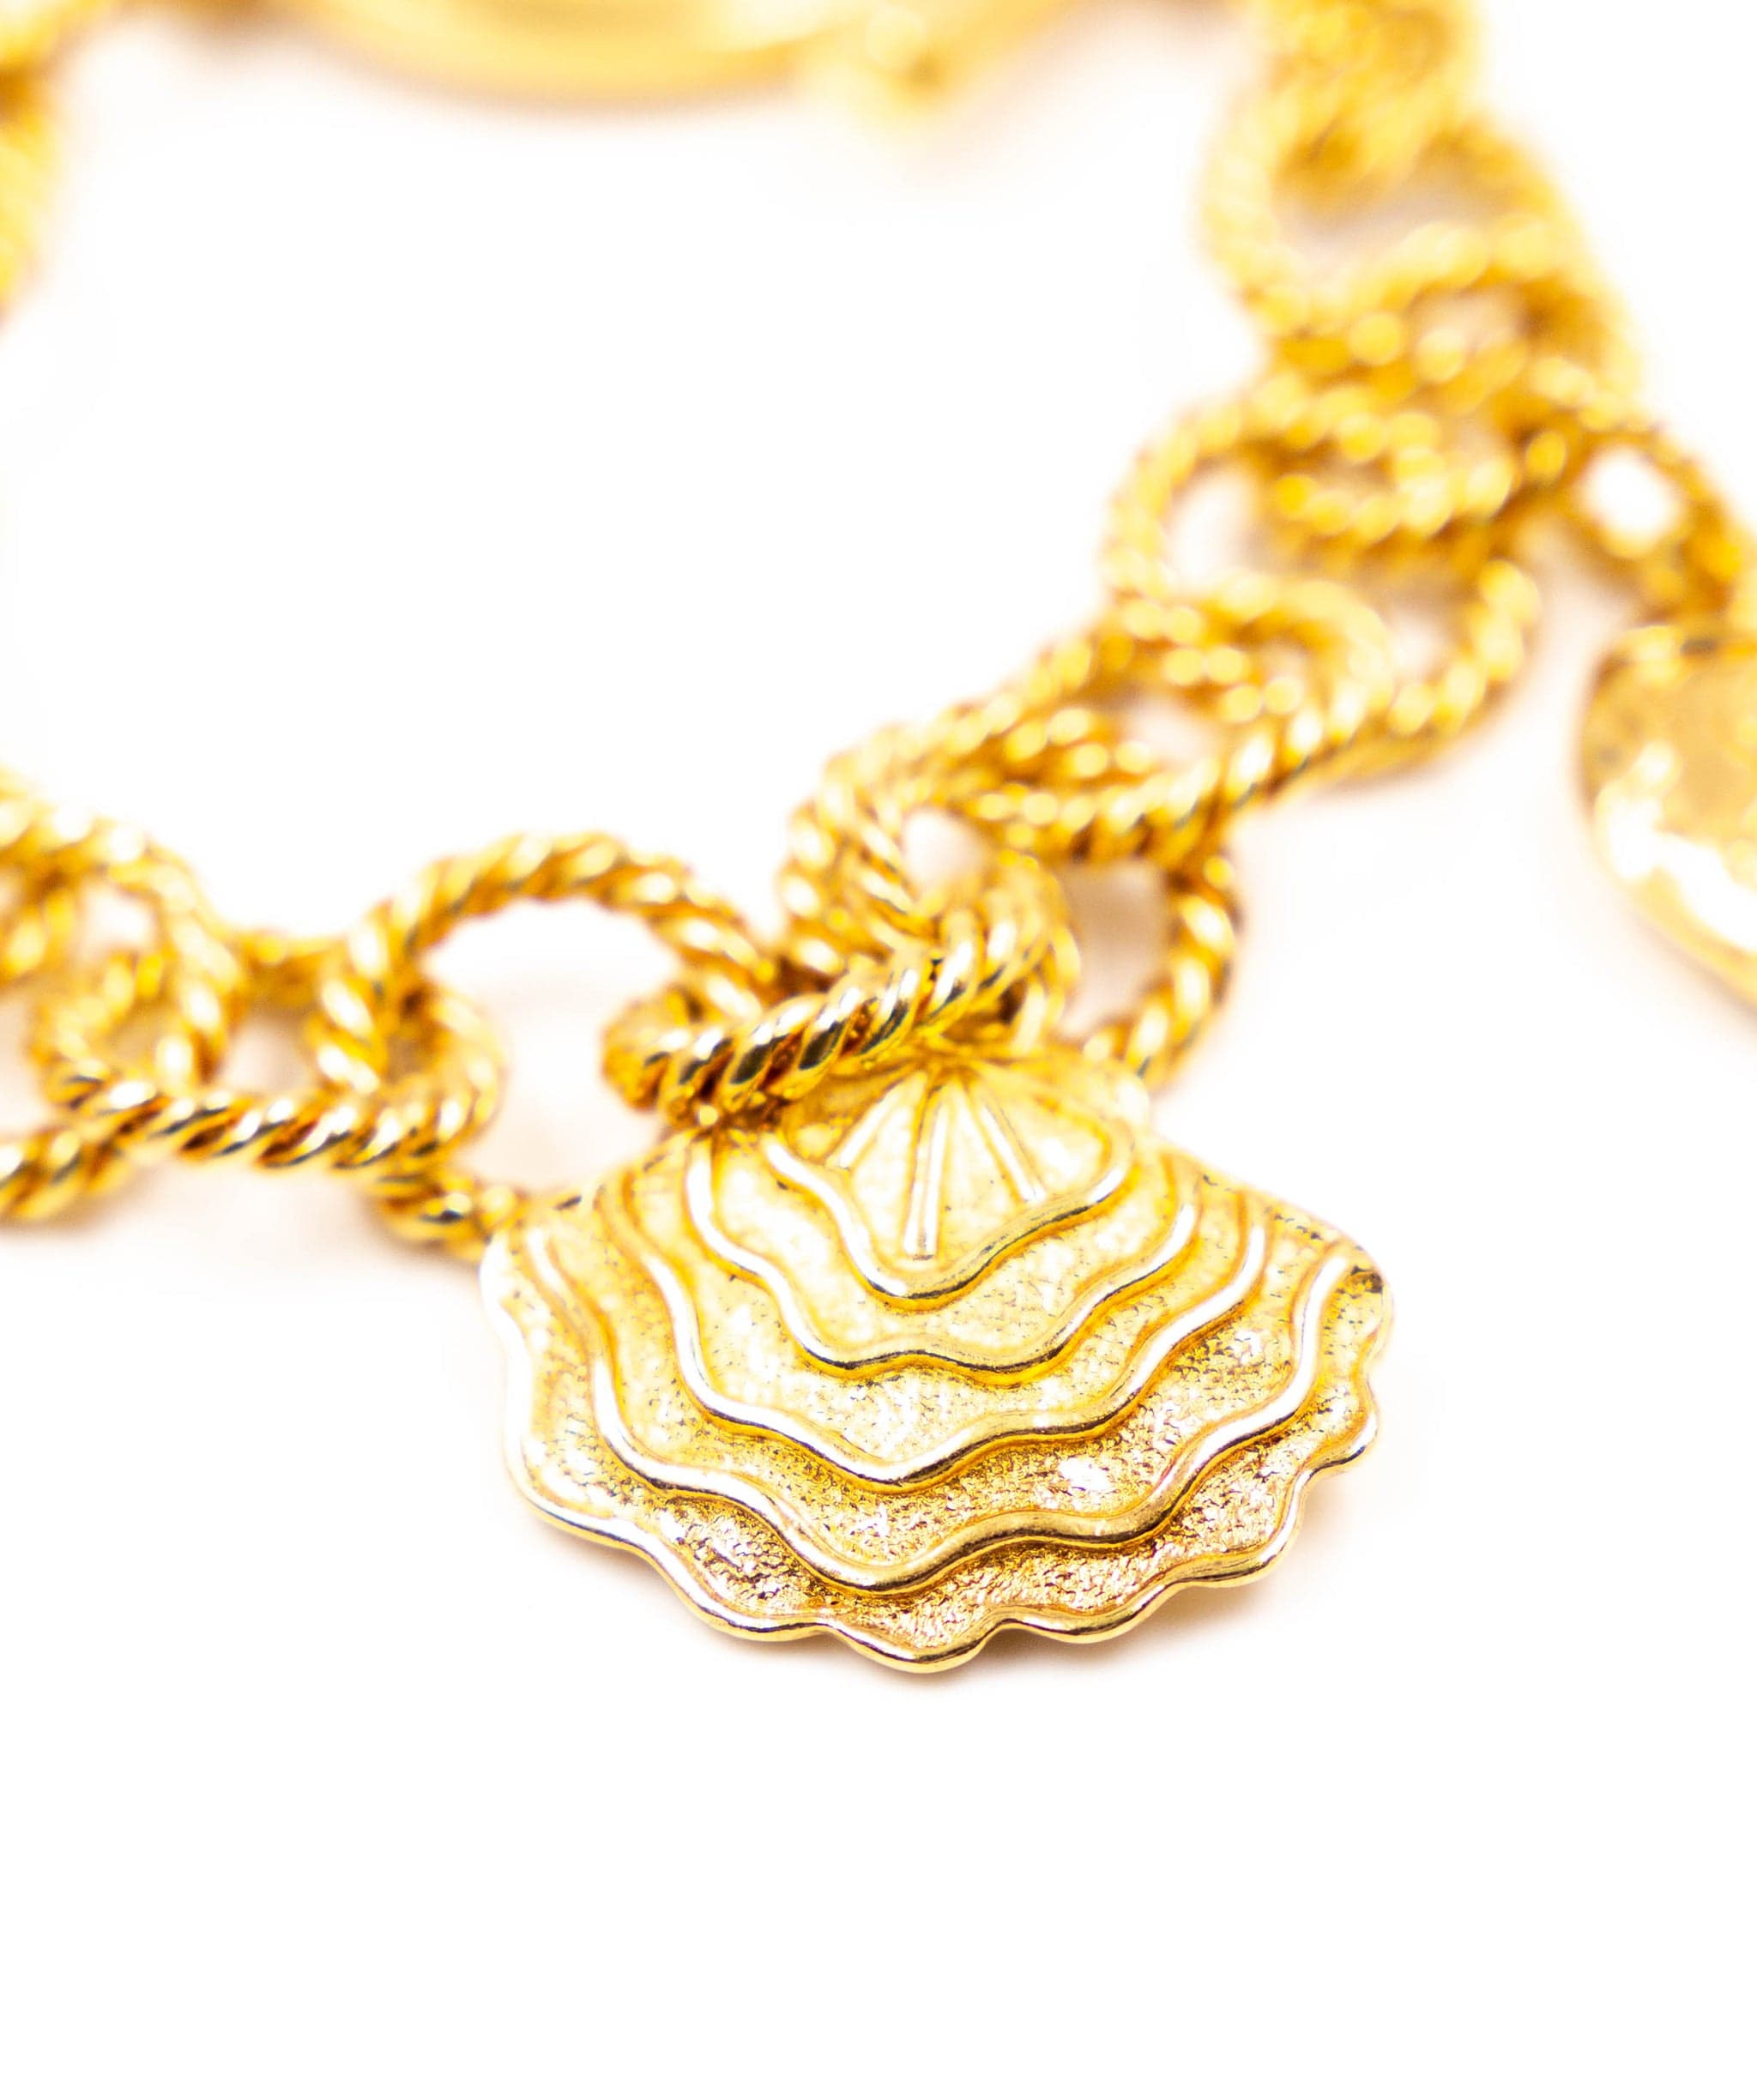 Celine Celine bracelet with shell pendants, vintage, gold, t bar closure AEL1042